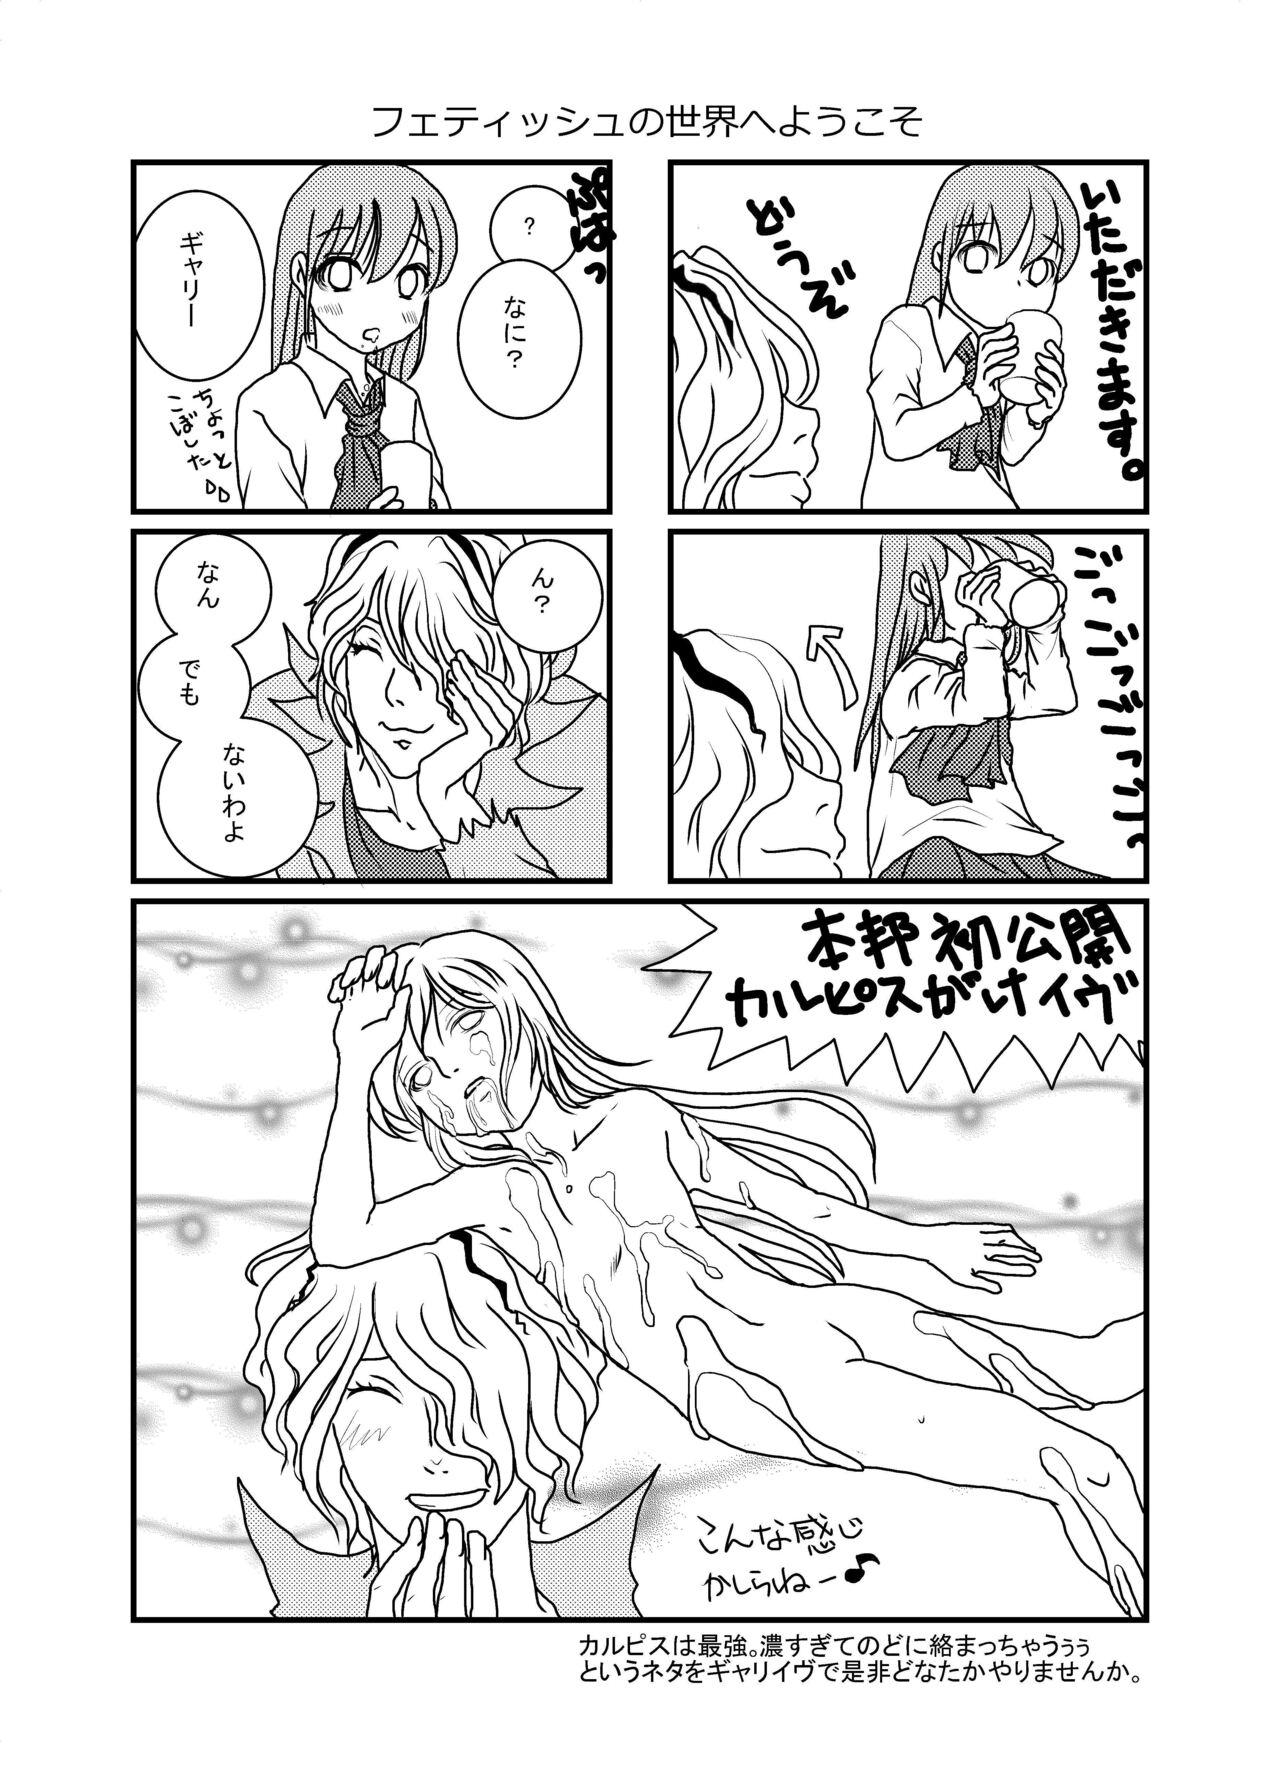 Cameltoe Ib Manga - Ib Peituda - Page 8